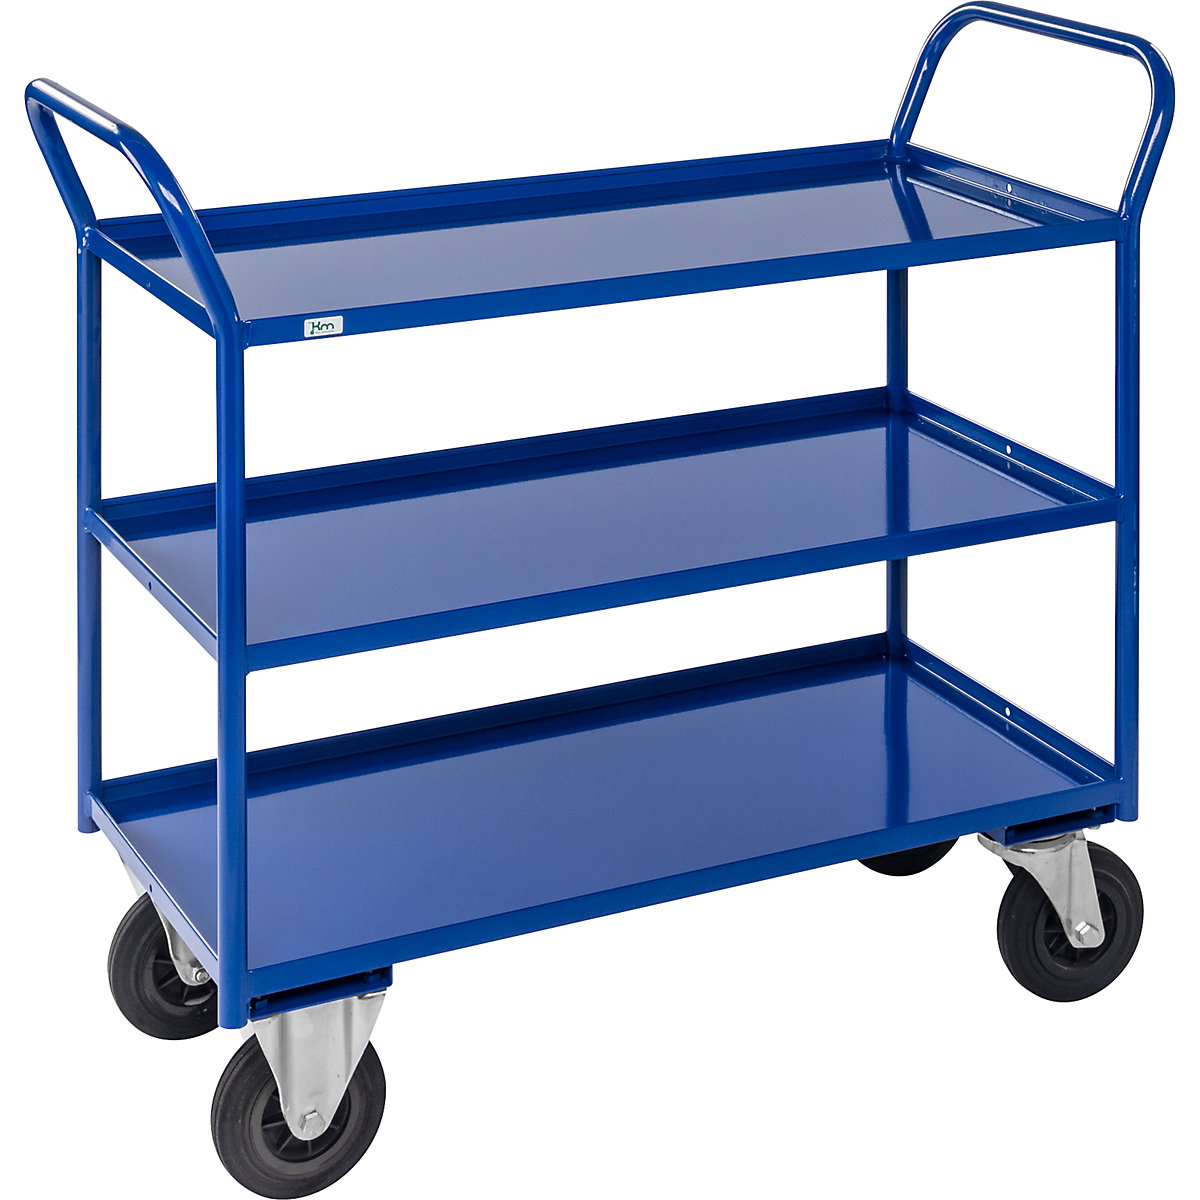 KM41 table trolley – Kongamek, 3 shelves with raised edges, LxWxH 1080 x 450 x 1000 mm, blue, 2 swivel castors and 2 fixed castors, 5+ items-2